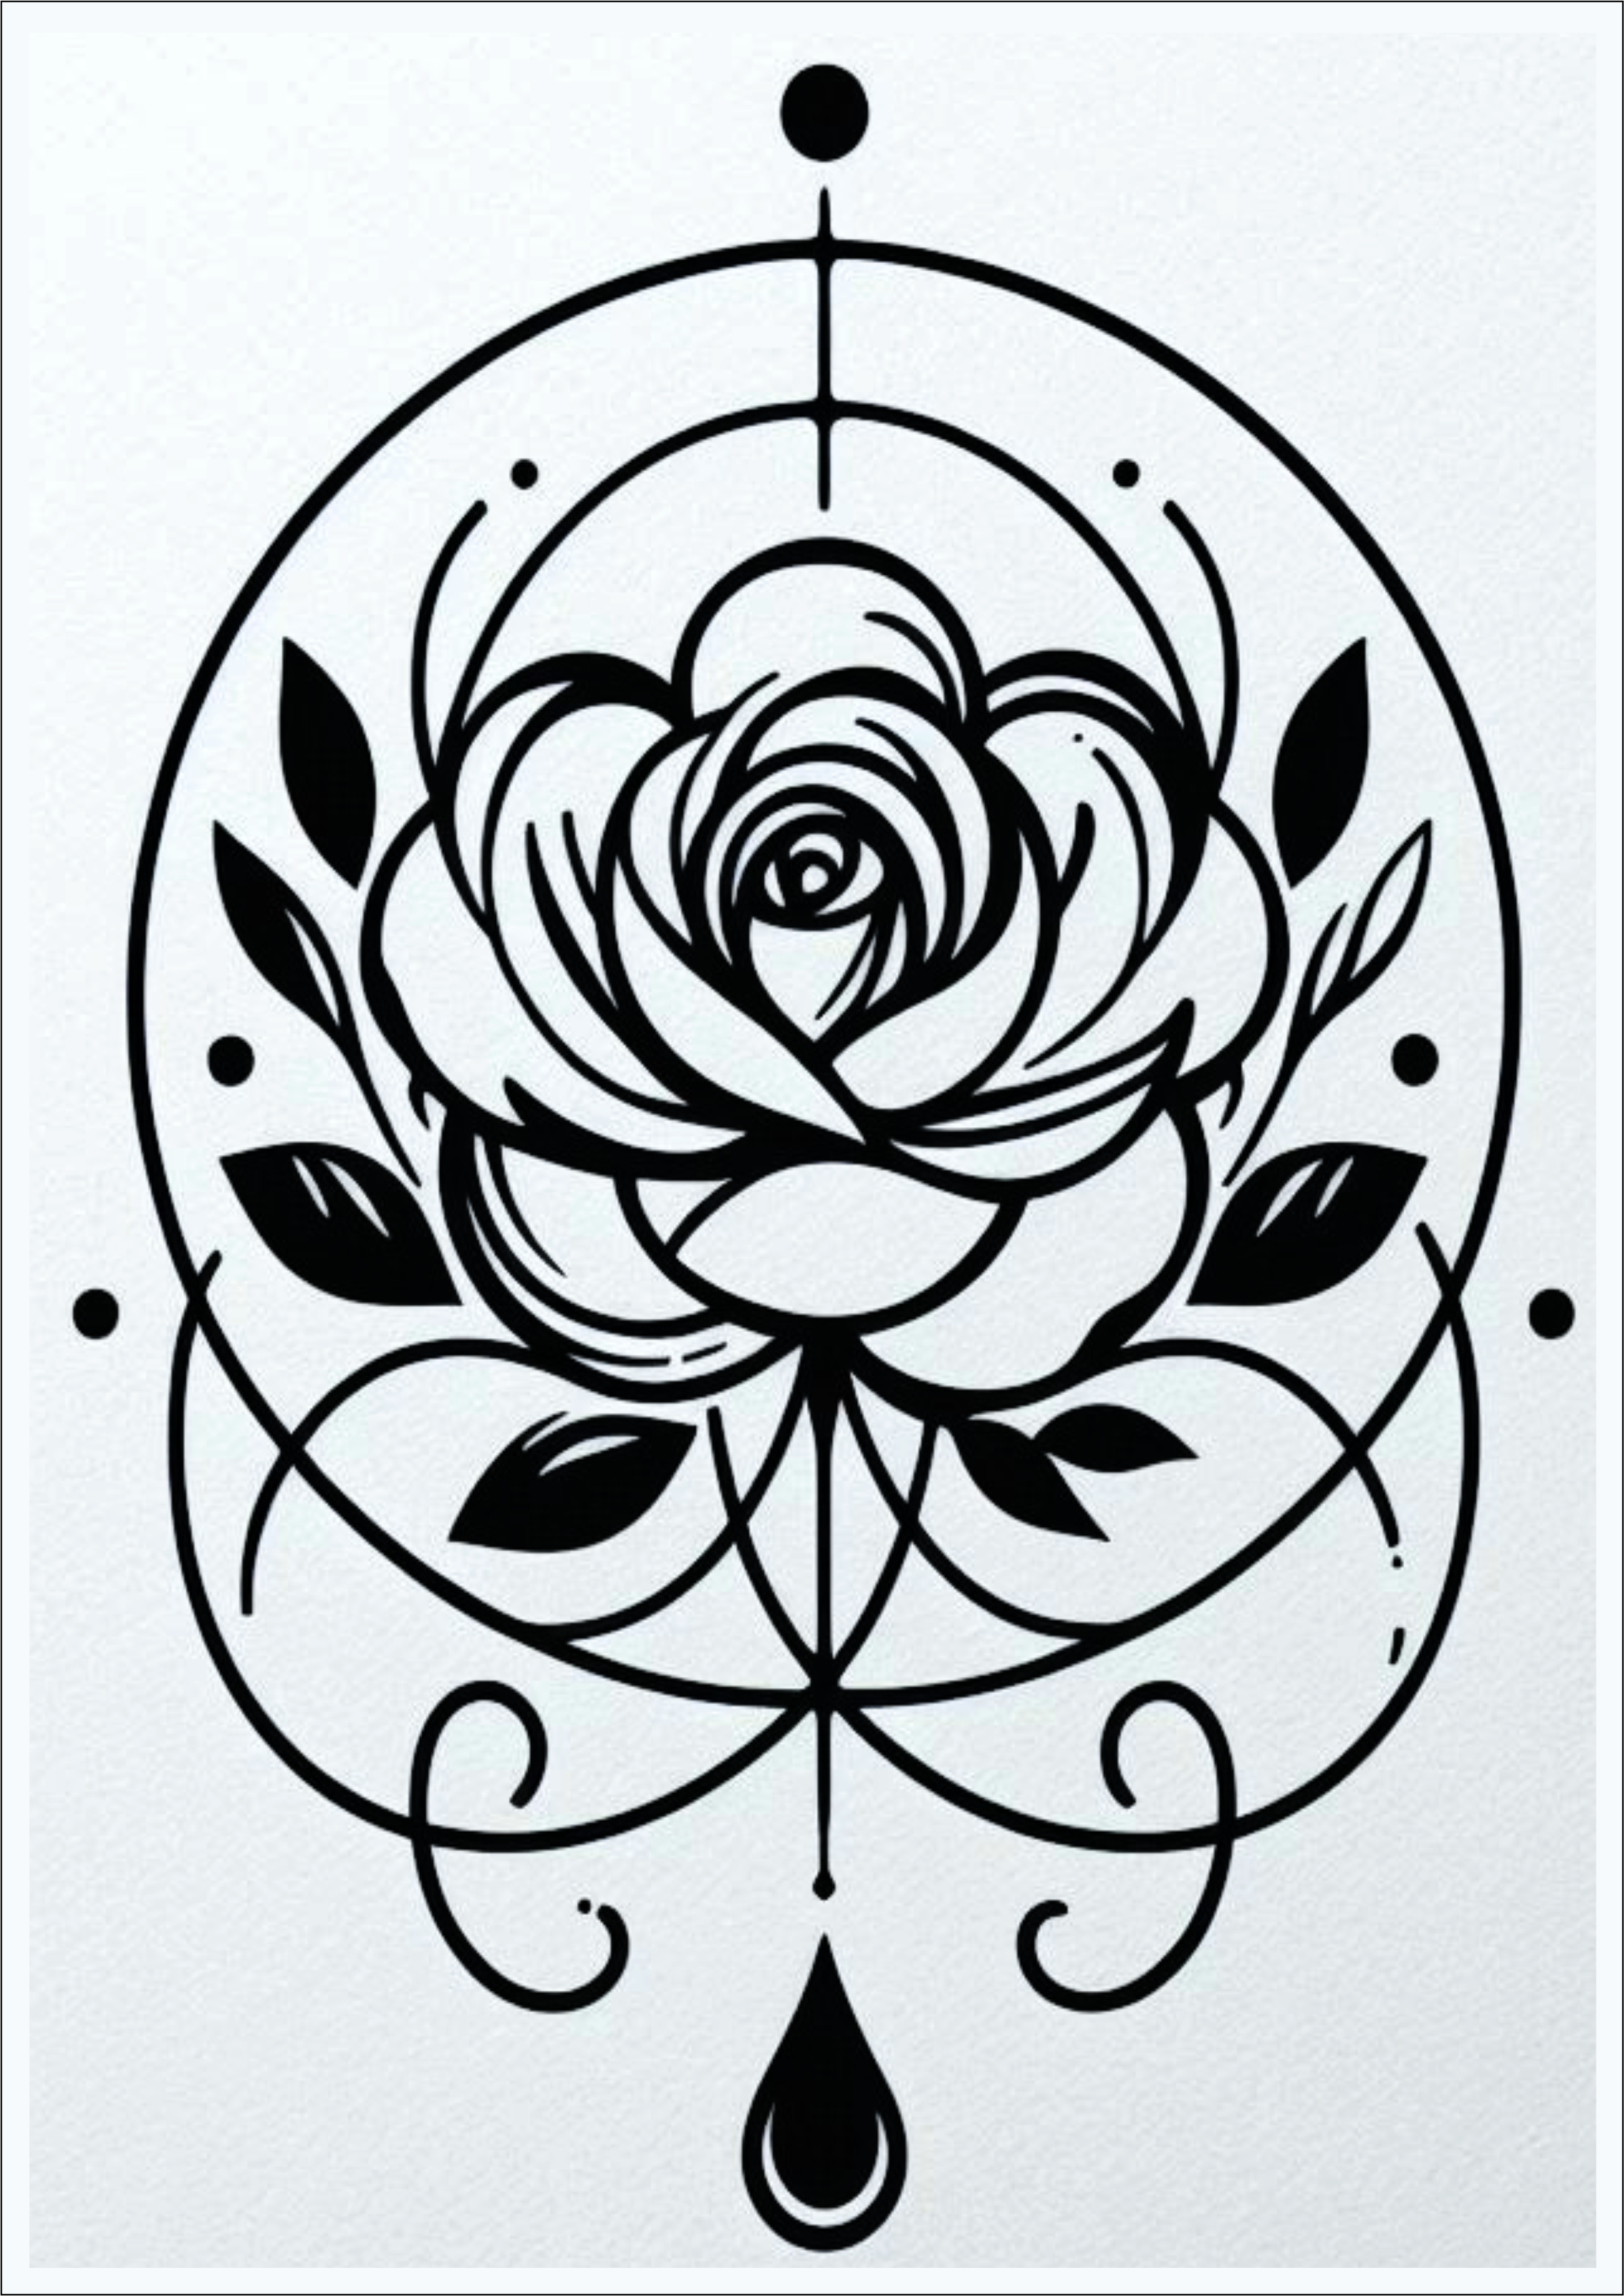 Ideias para tatuagem feminina minimalista flor png